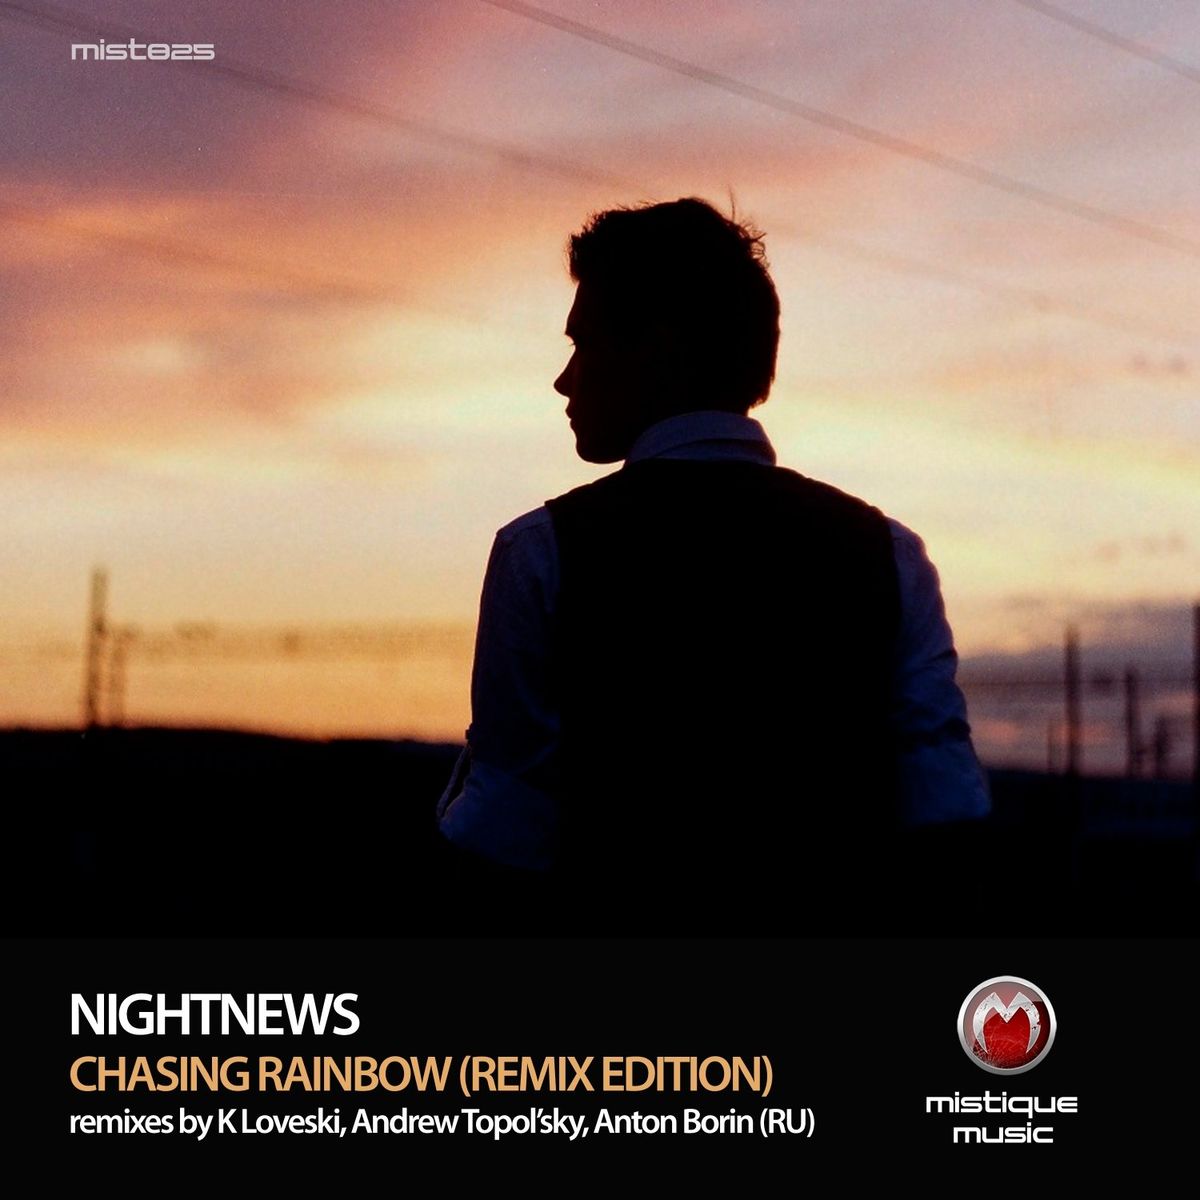 Nightnews - Chasing Rainbow (Remix Edition) [MIST825]